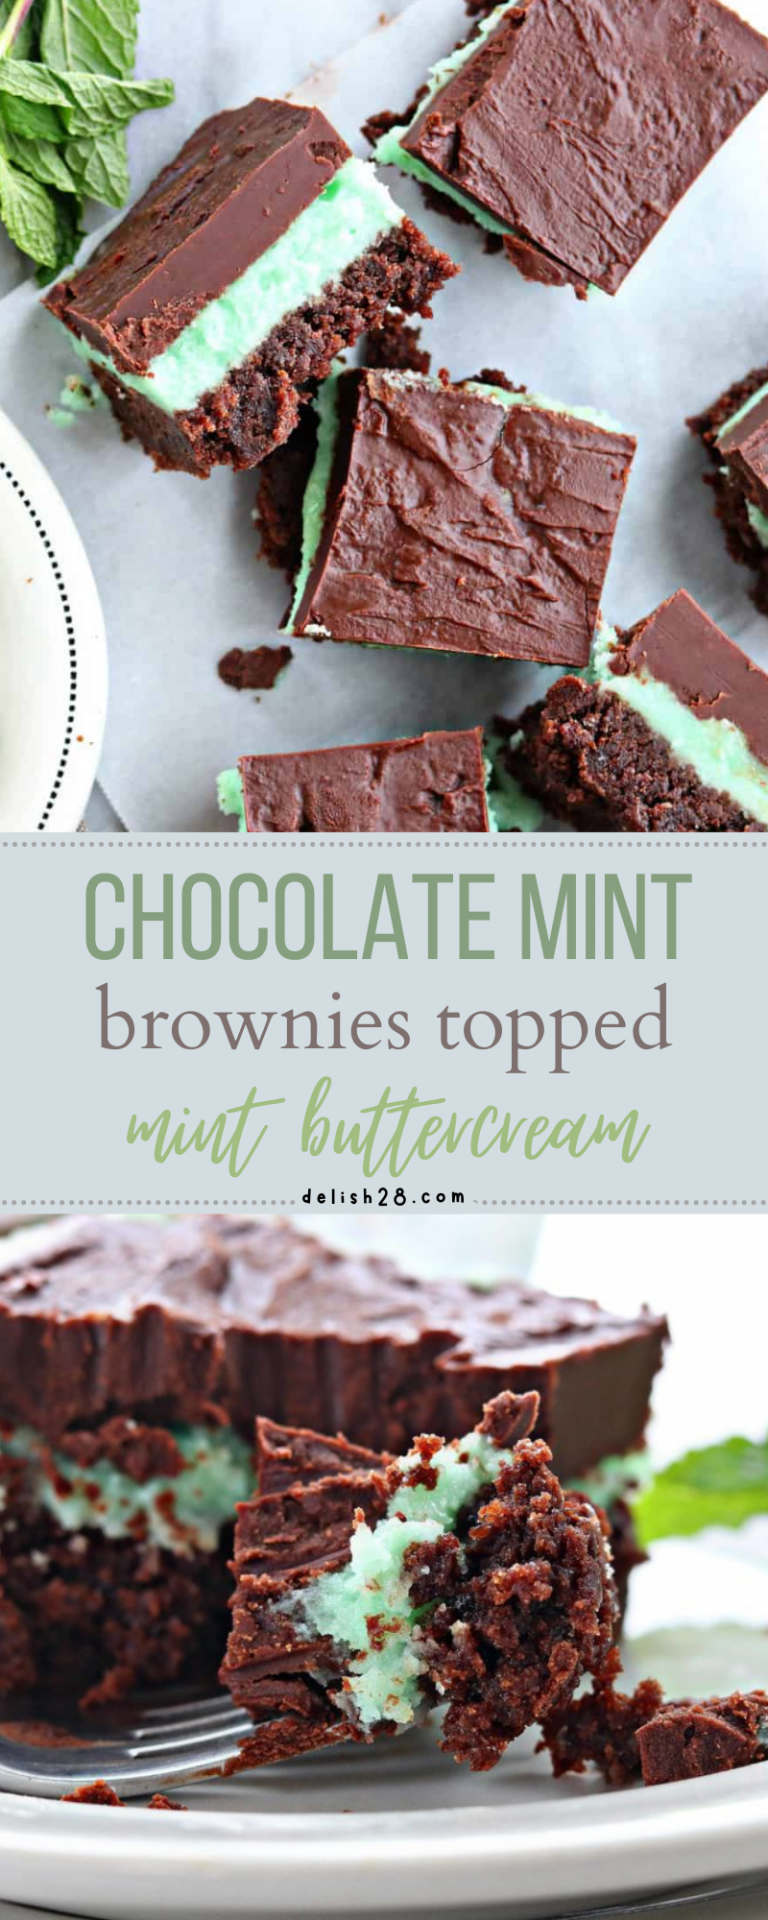 Chocolate Mint Brownies - Delish28